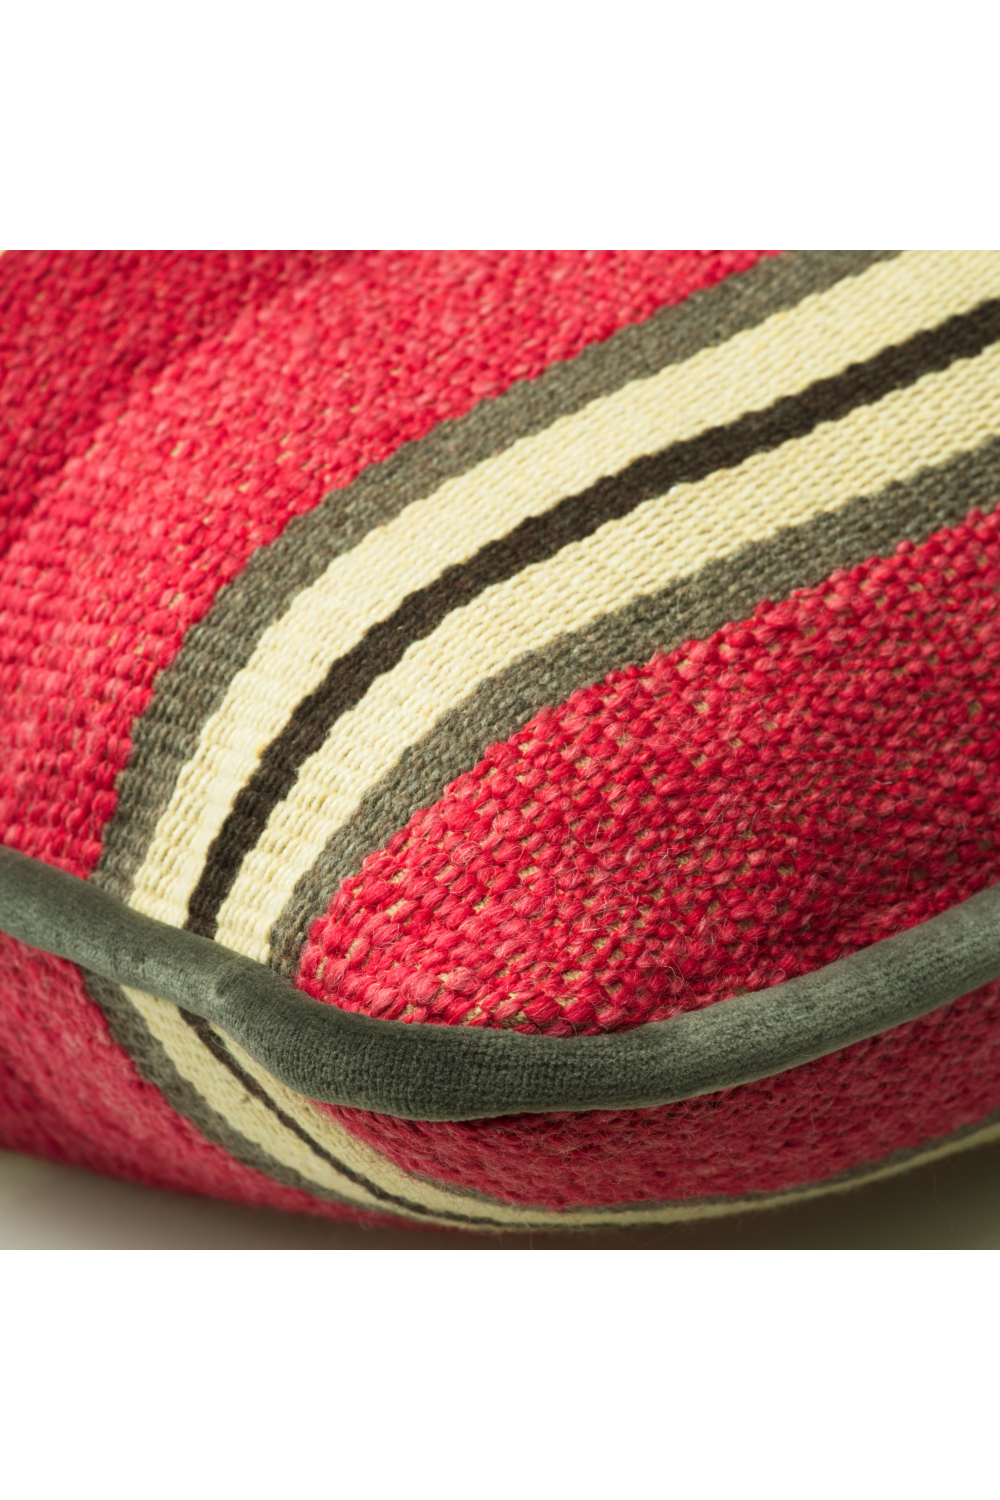 Striped Rectangular Cushion | Andrew Martin Portscasto Plume | Oroa.com